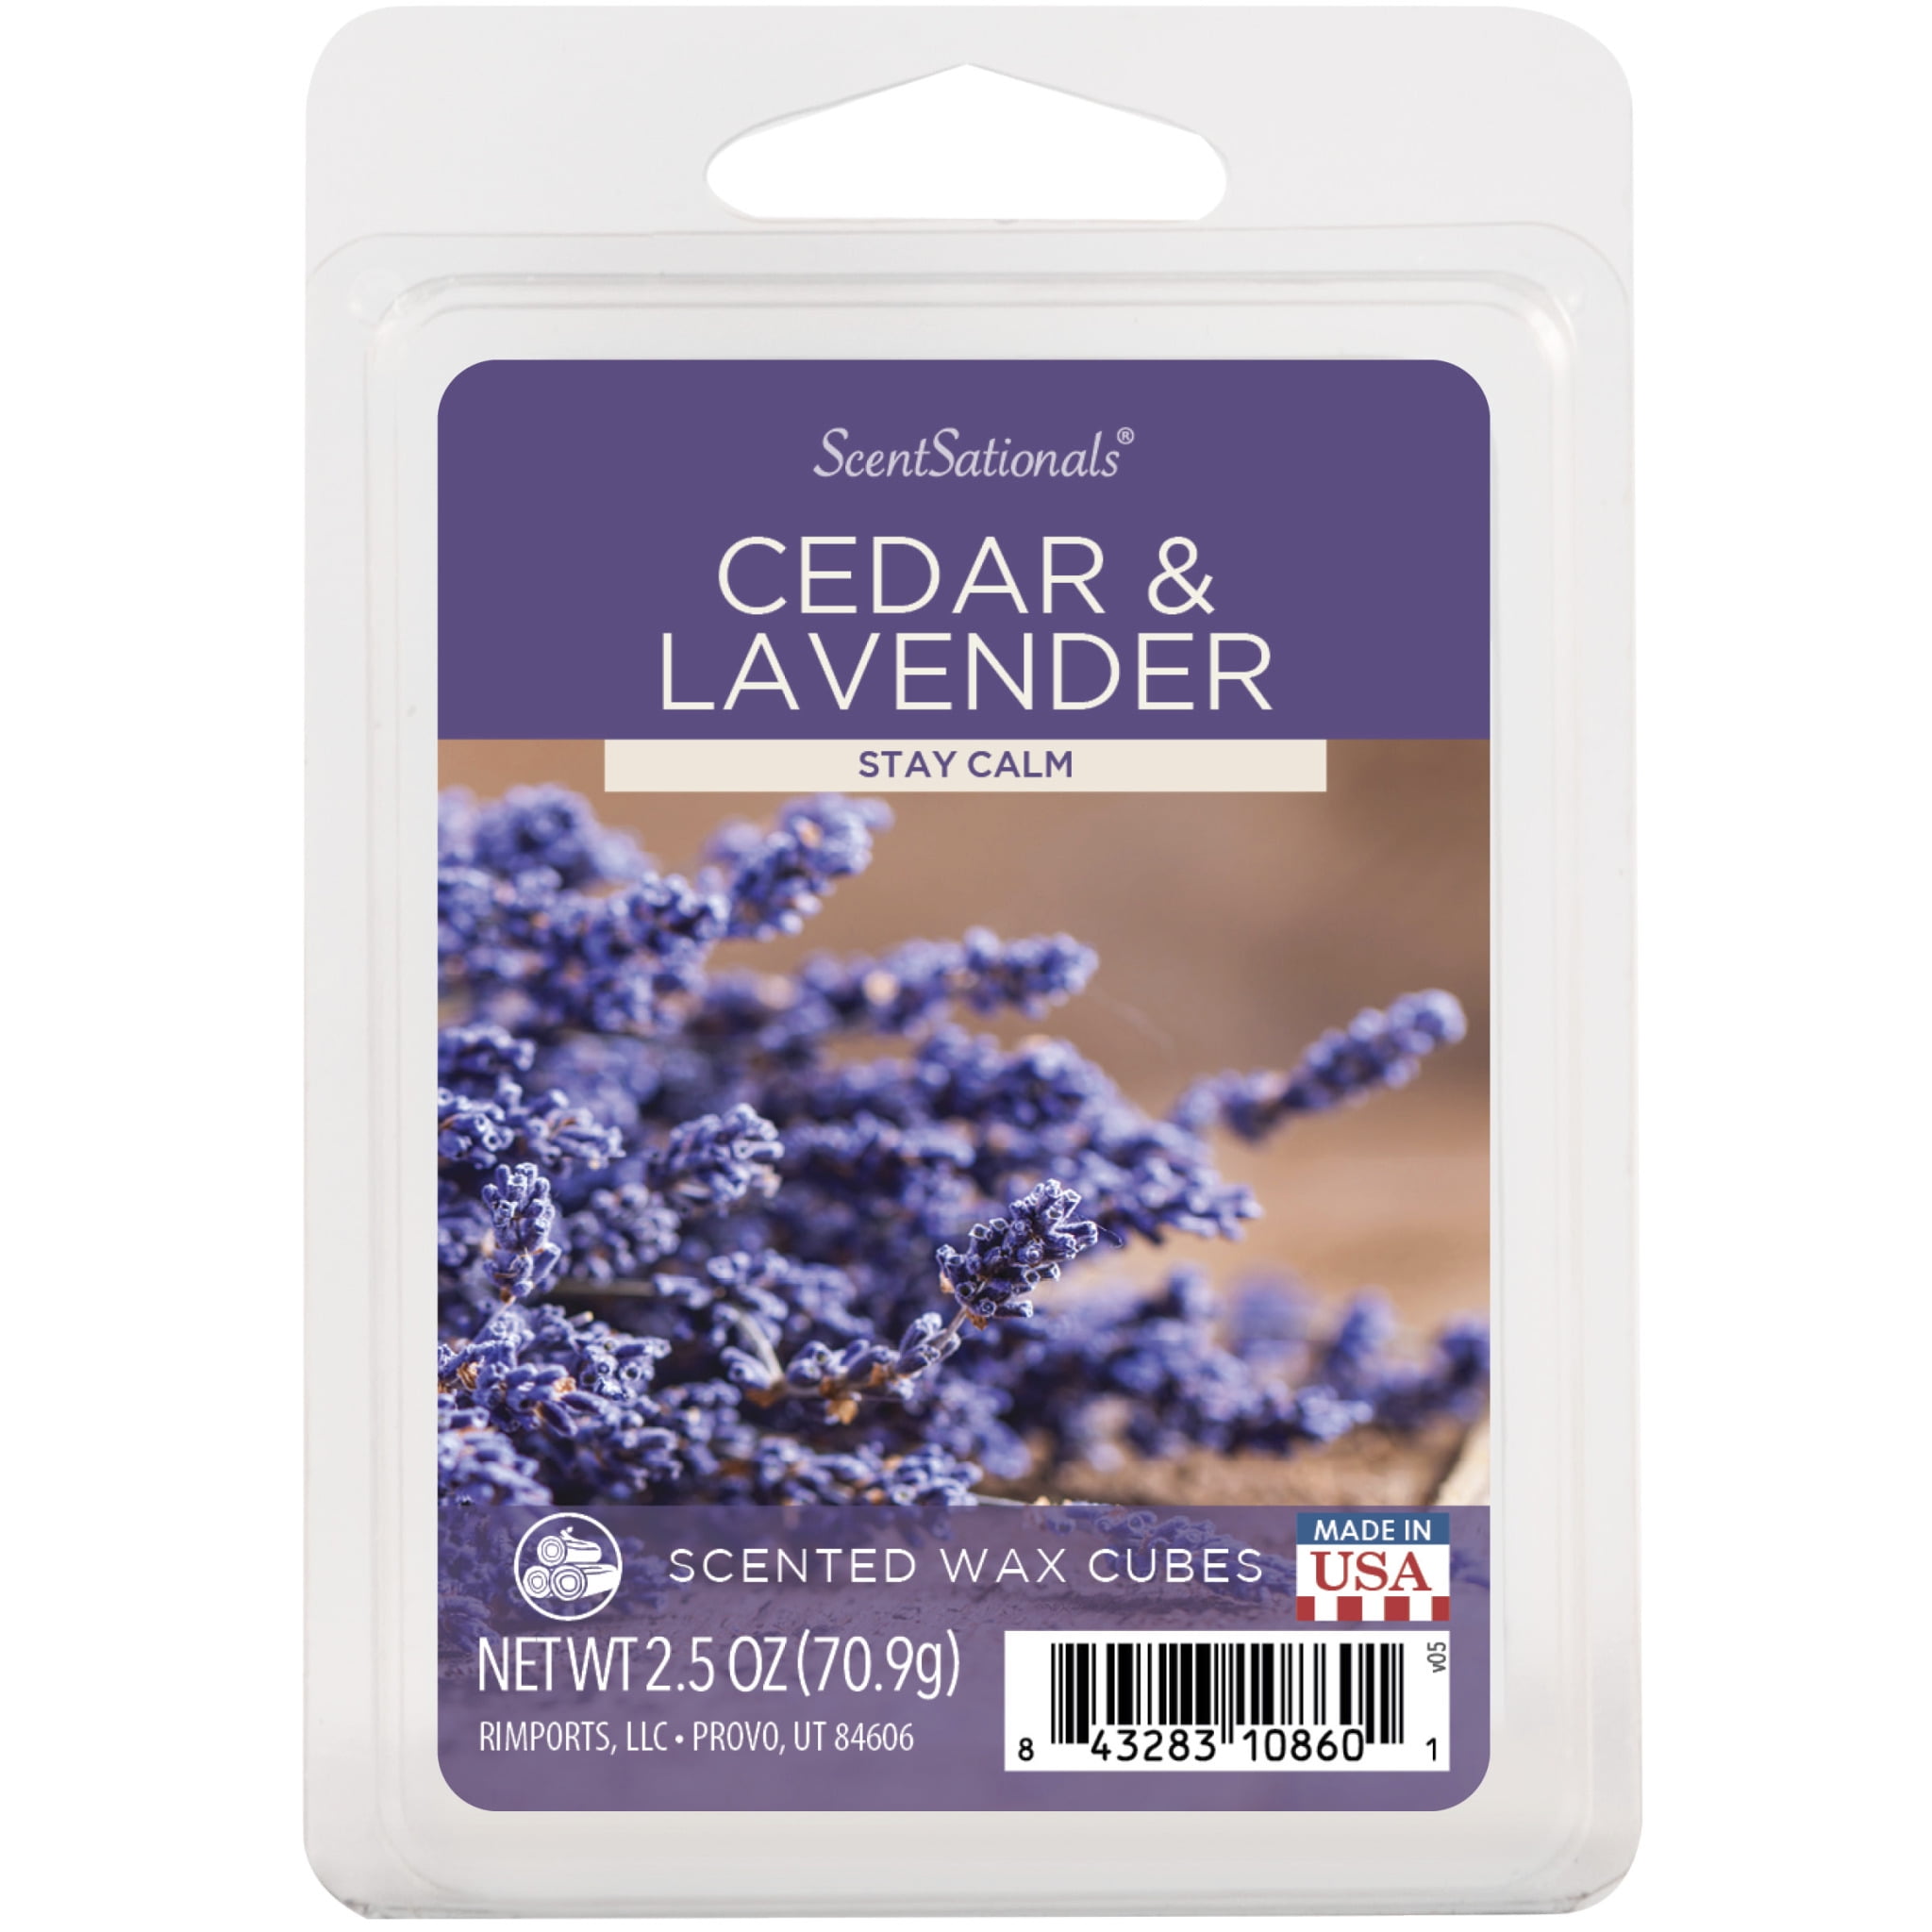 Scentsationals Cedar and Lavender Scented Wax Cubes, 2.5 oz